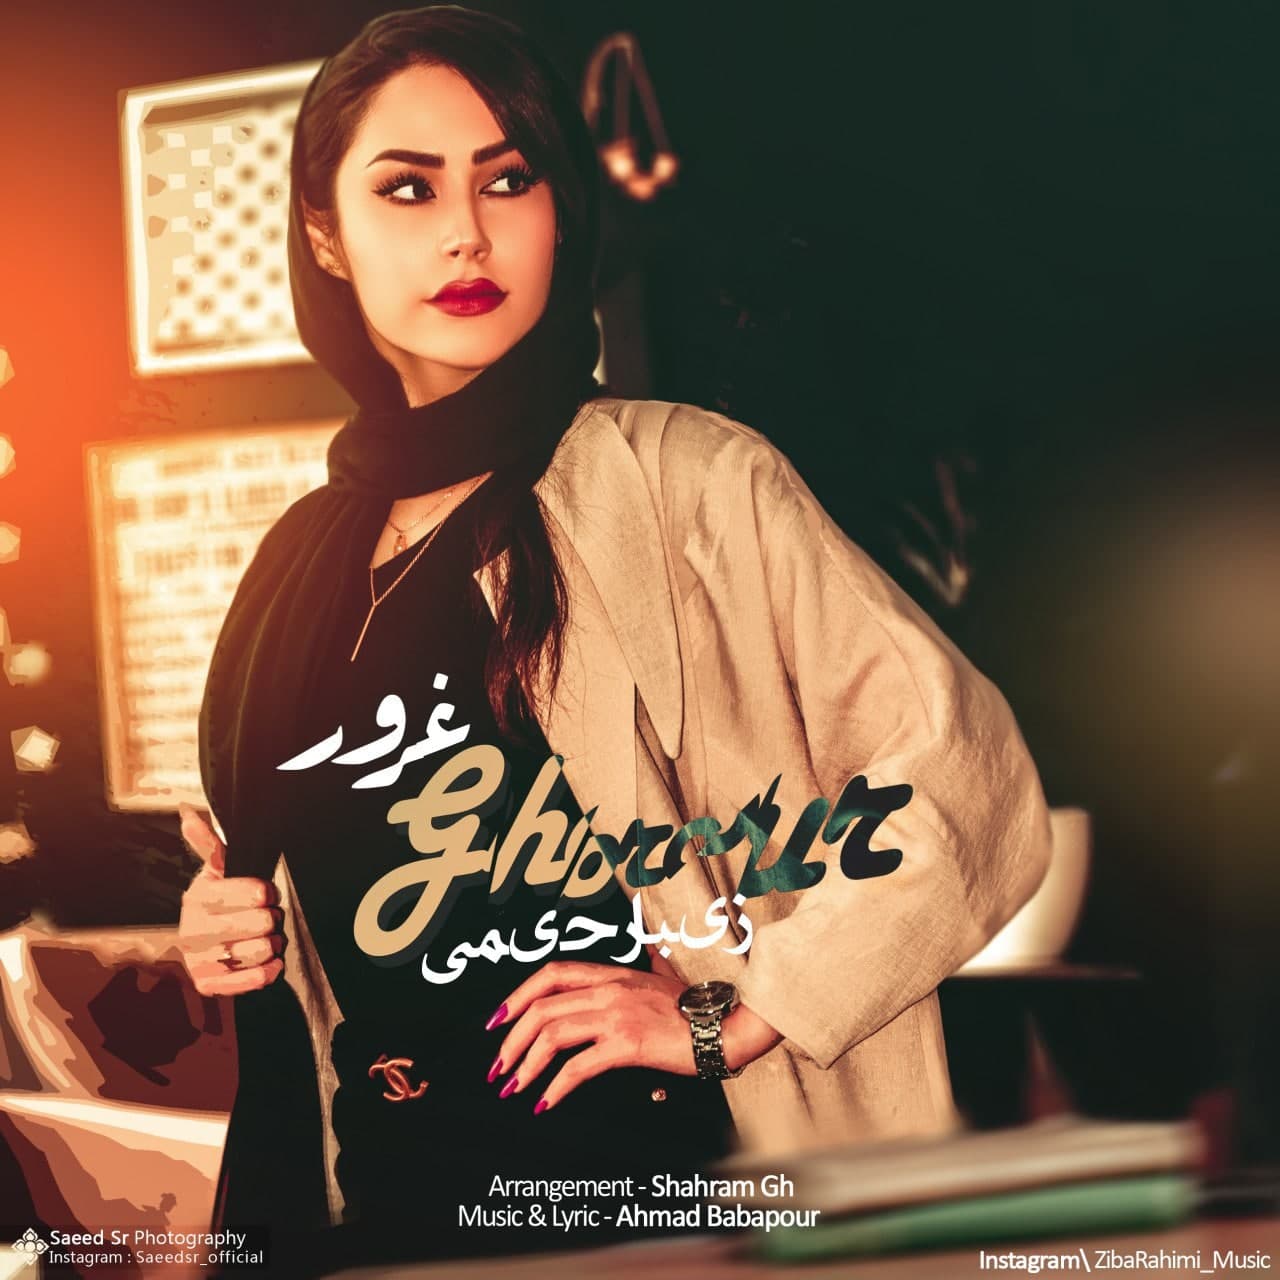  دانلود آهنگ جدید زیبا رحیمی - غرور | Download New Music By Ziba Rahimi - Ghorur